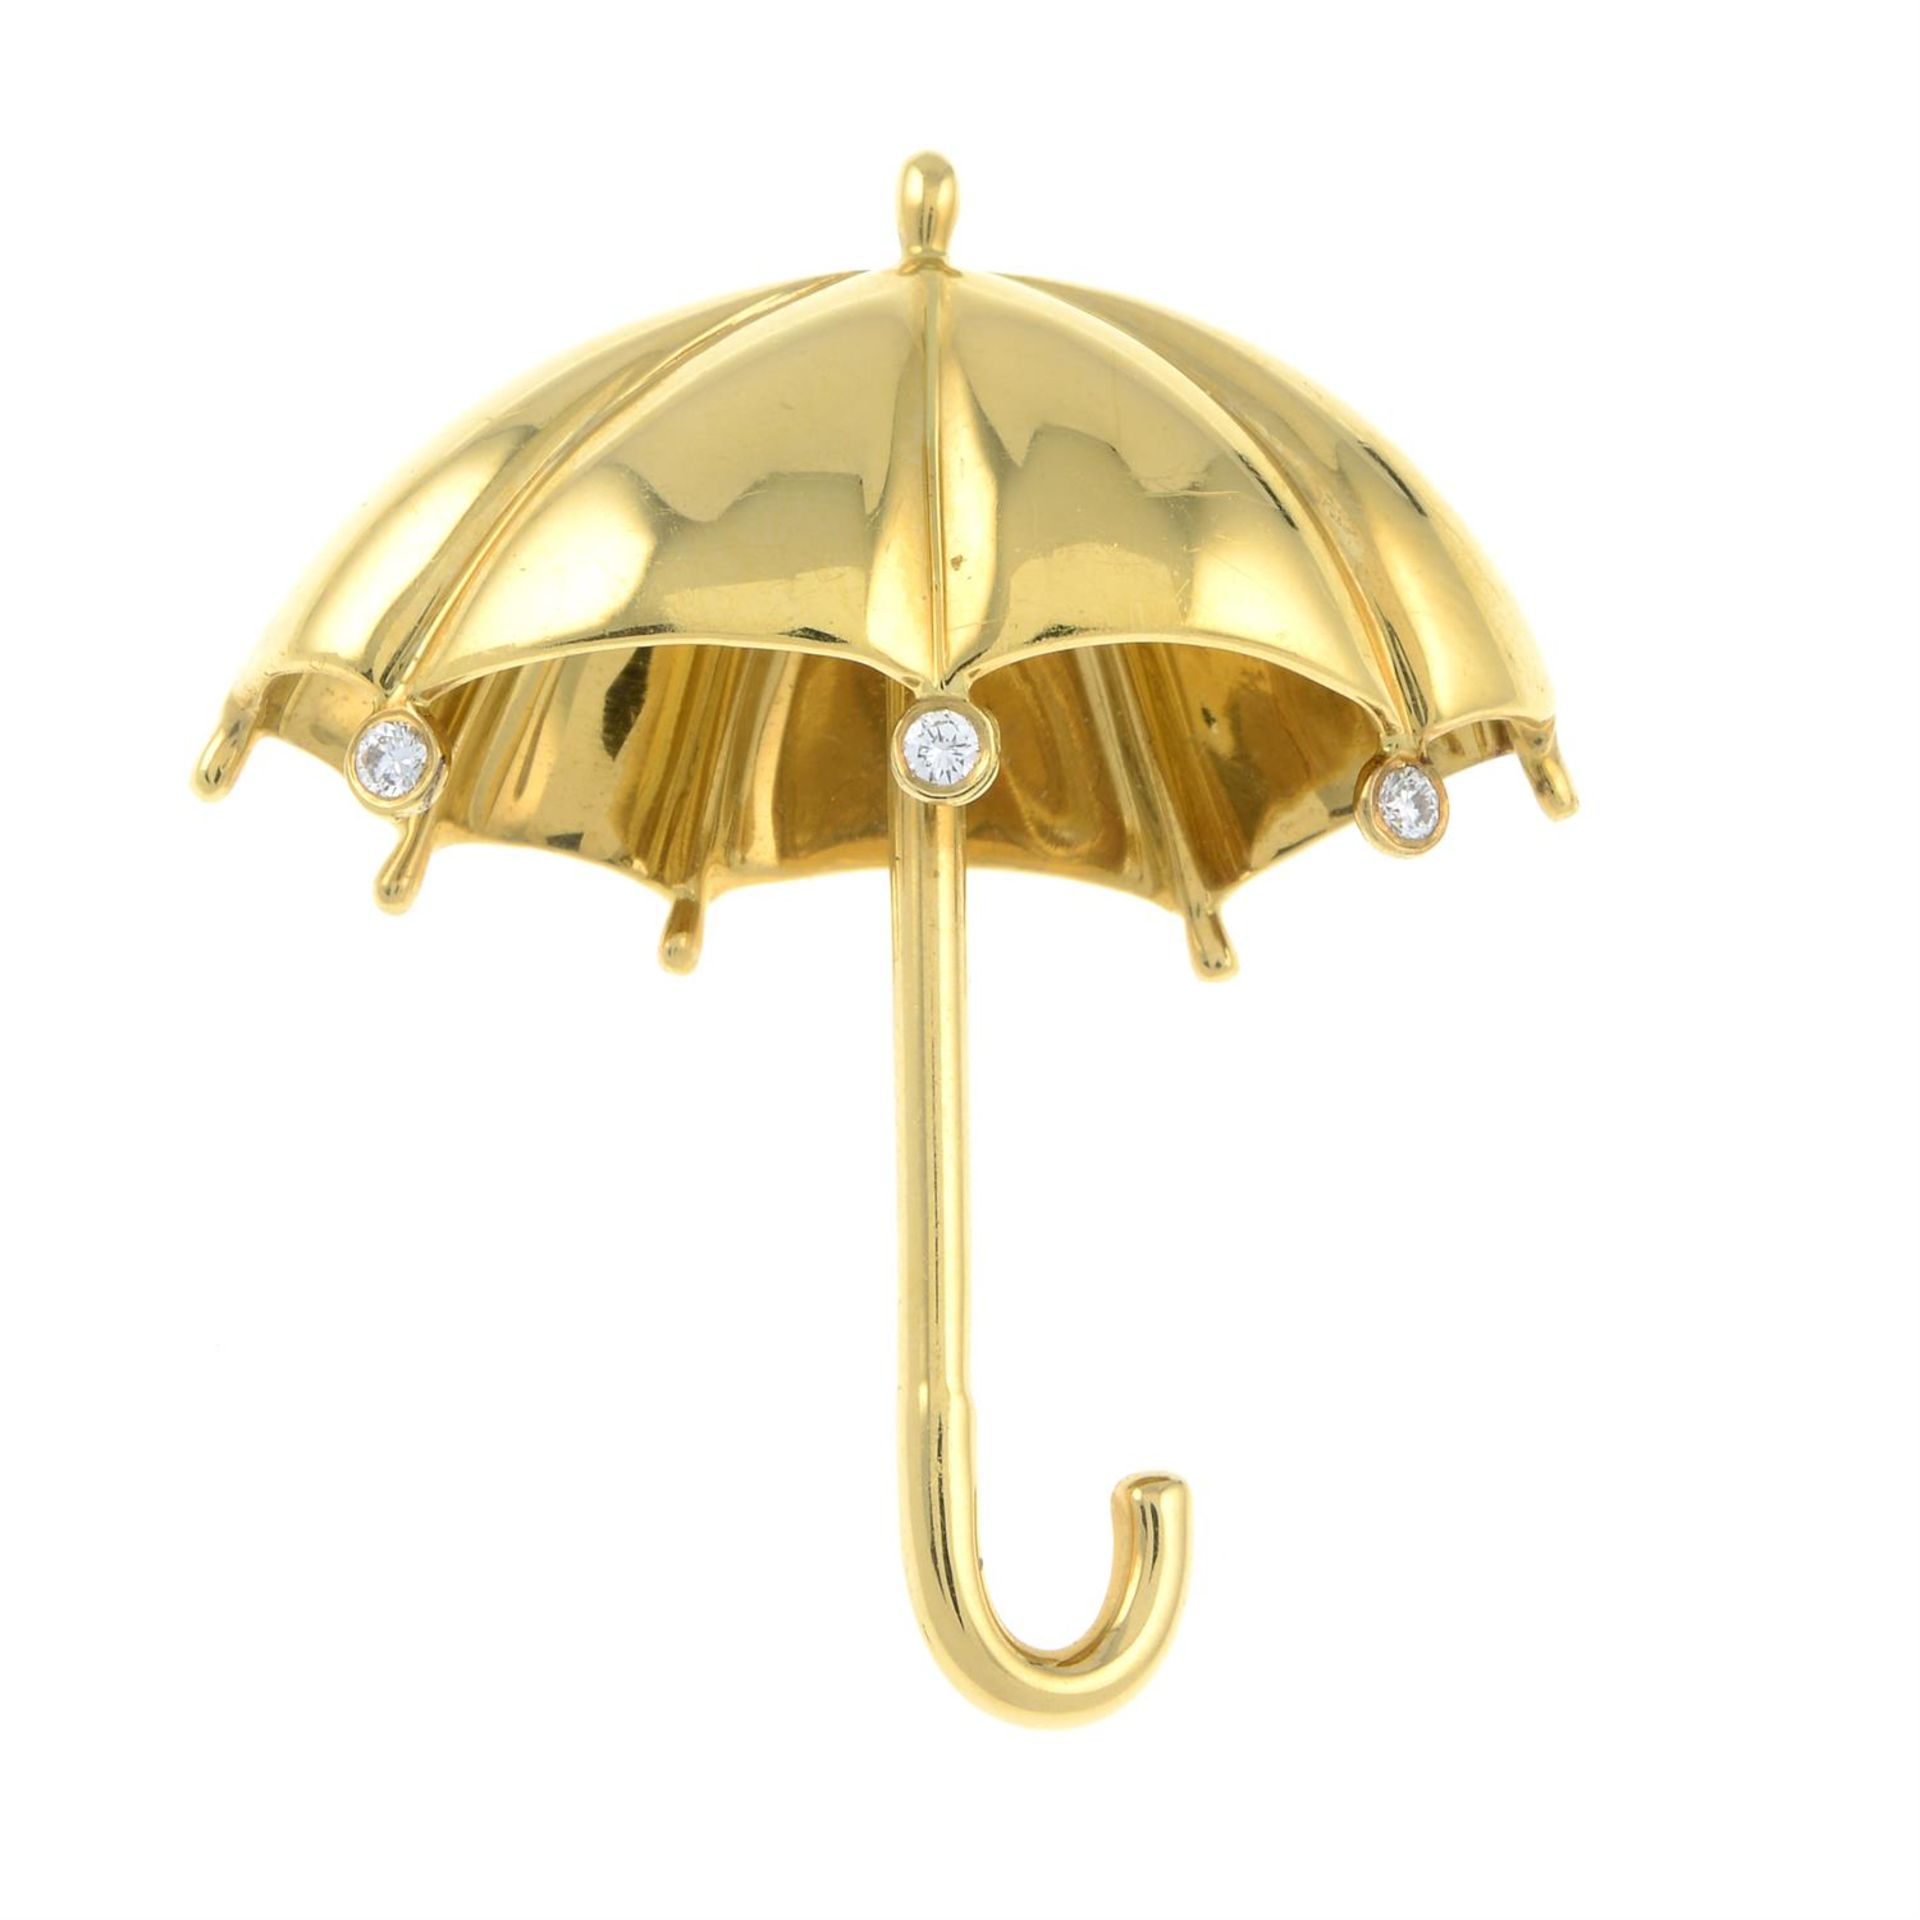 A brilliant-cut diamond umbrella brooch, by Tiffany & Co. - Image 2 of 4